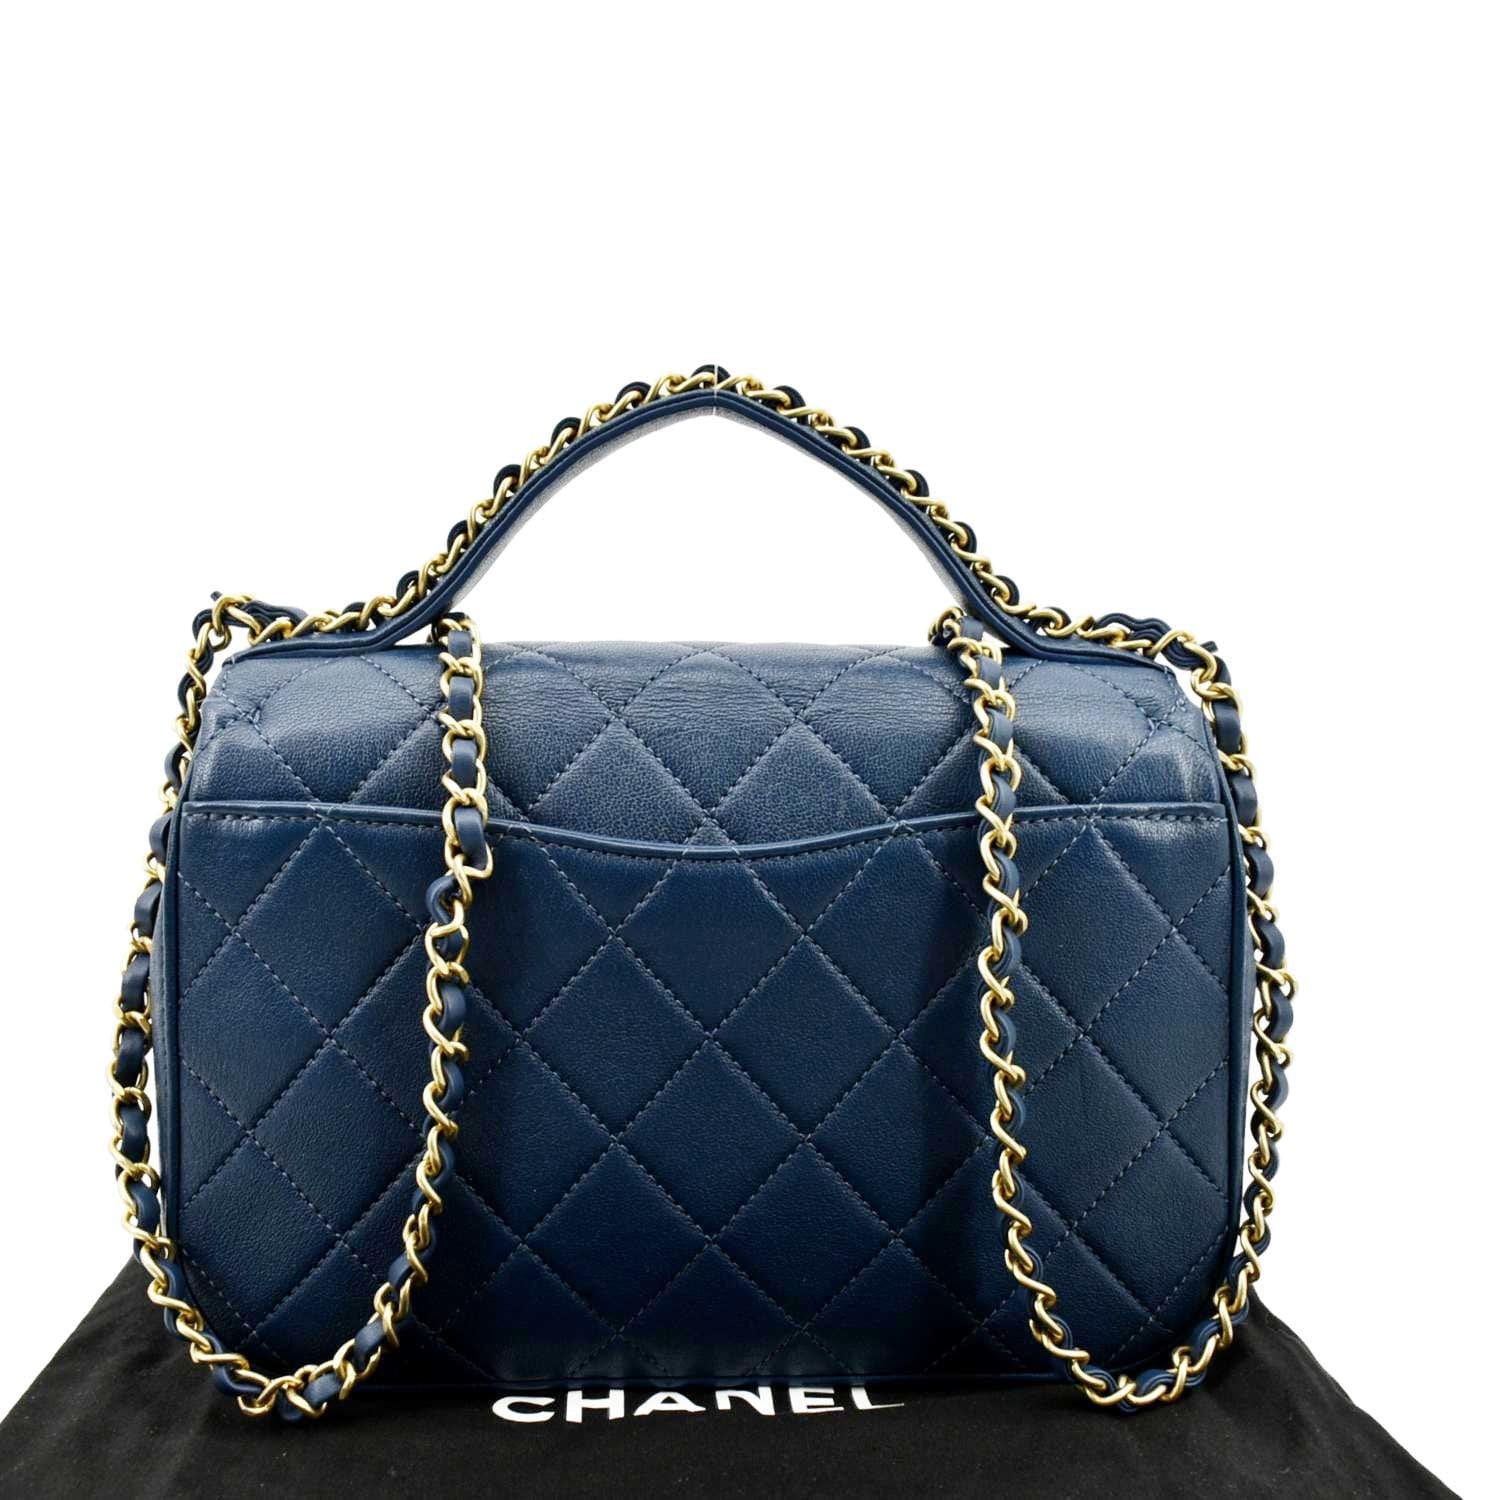 zhongningyifeng Shoulder Bag for Women Handbag Purse Leather Fashion  Upgrade with Chain Strap (black1): Handbags